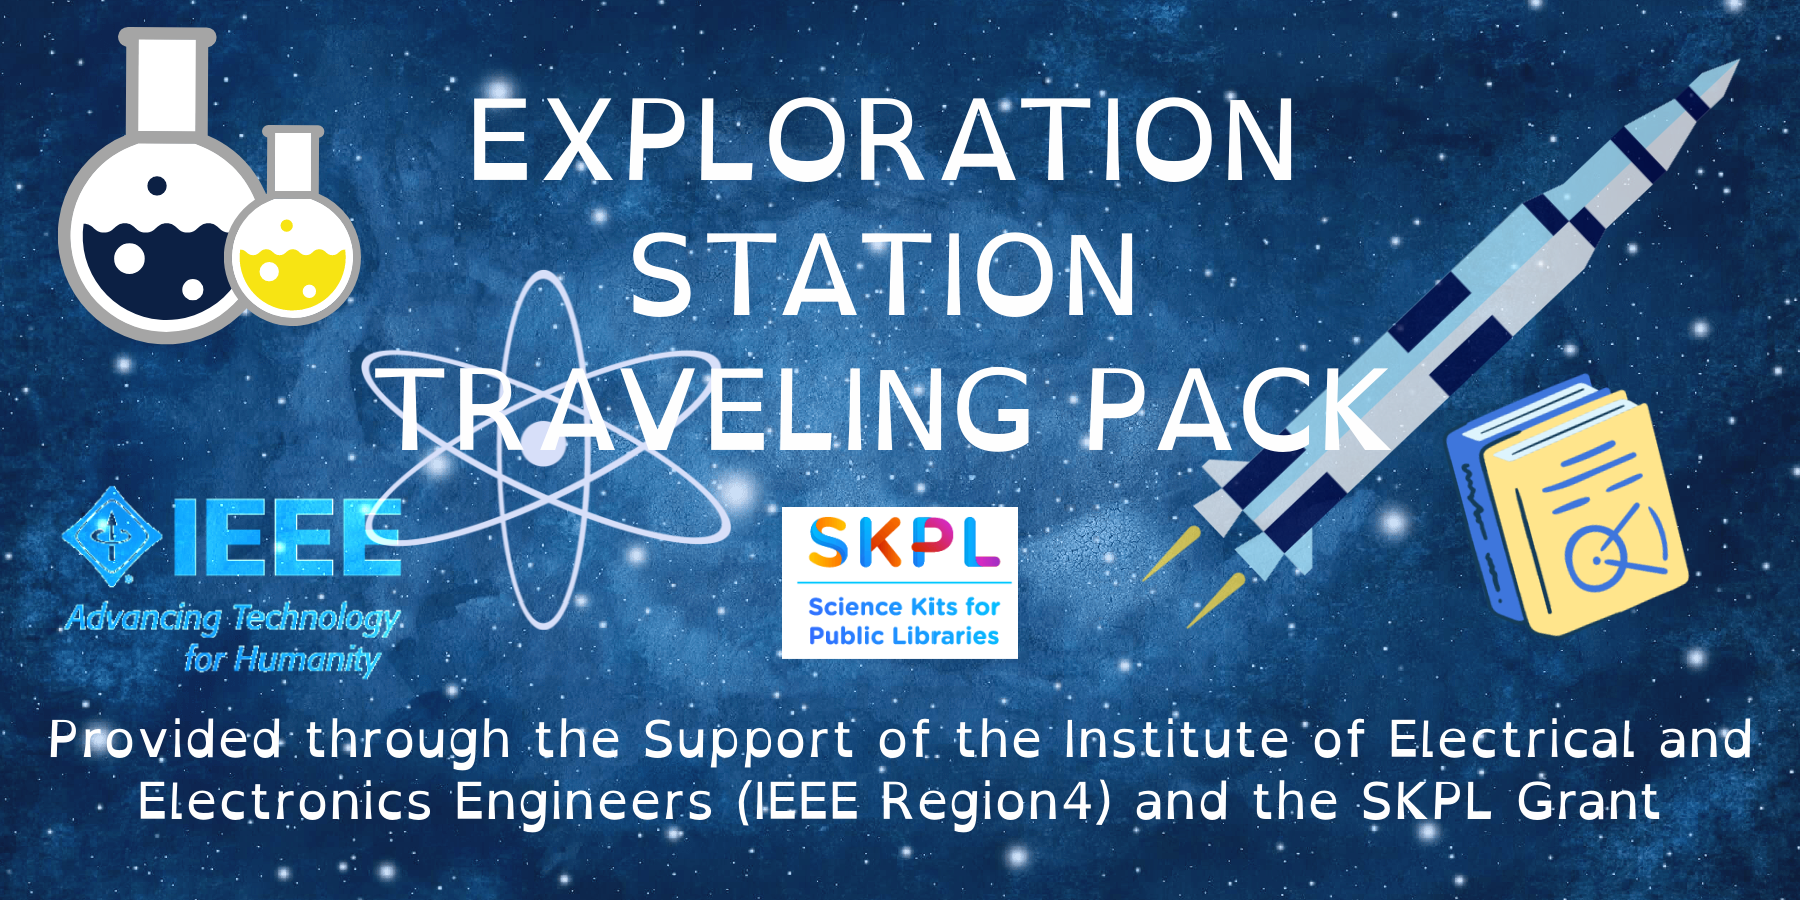 exploration station tag 1 (1).png